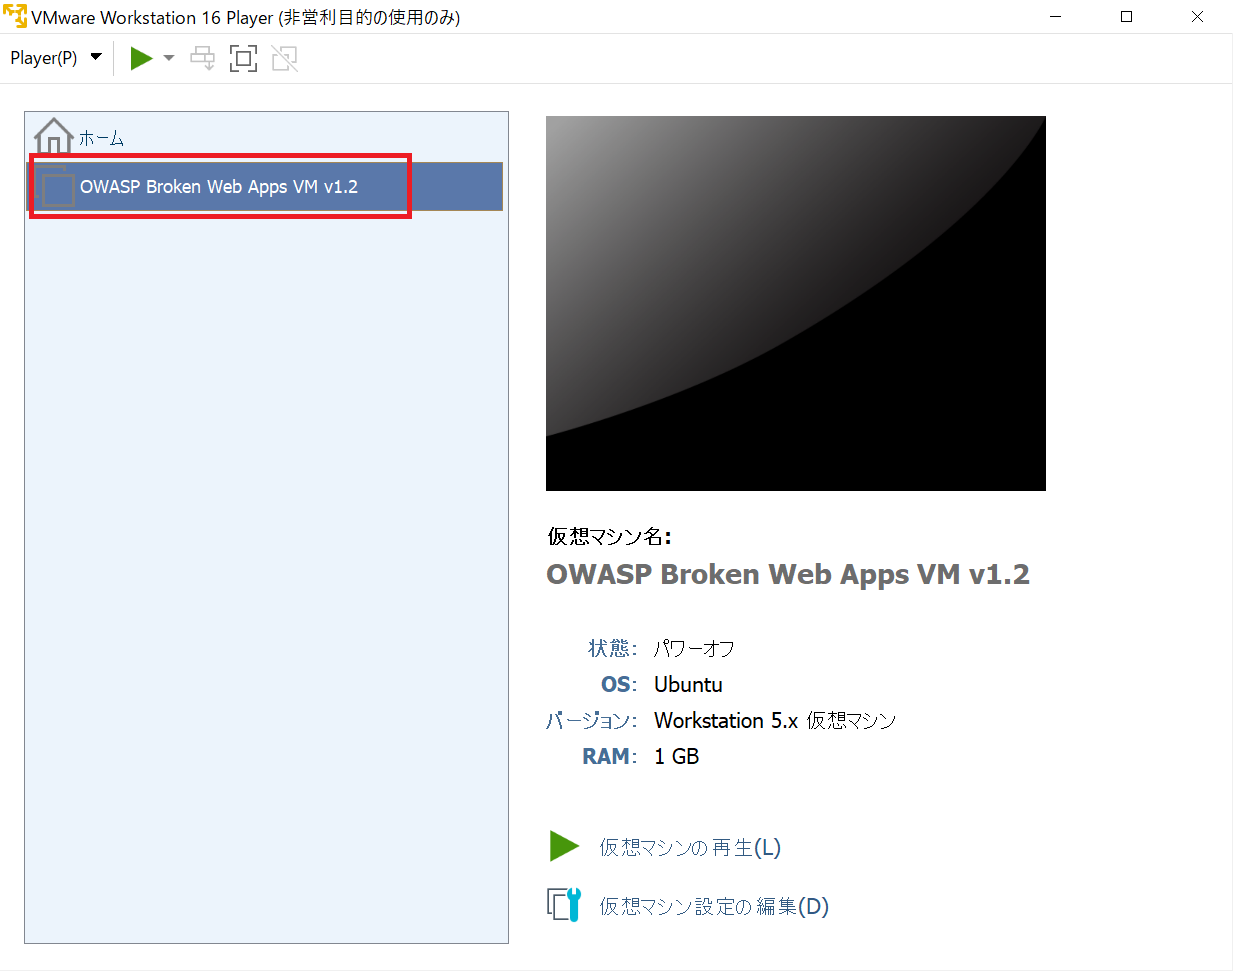 VMware Workstation Player上にOWASP BWA(4)